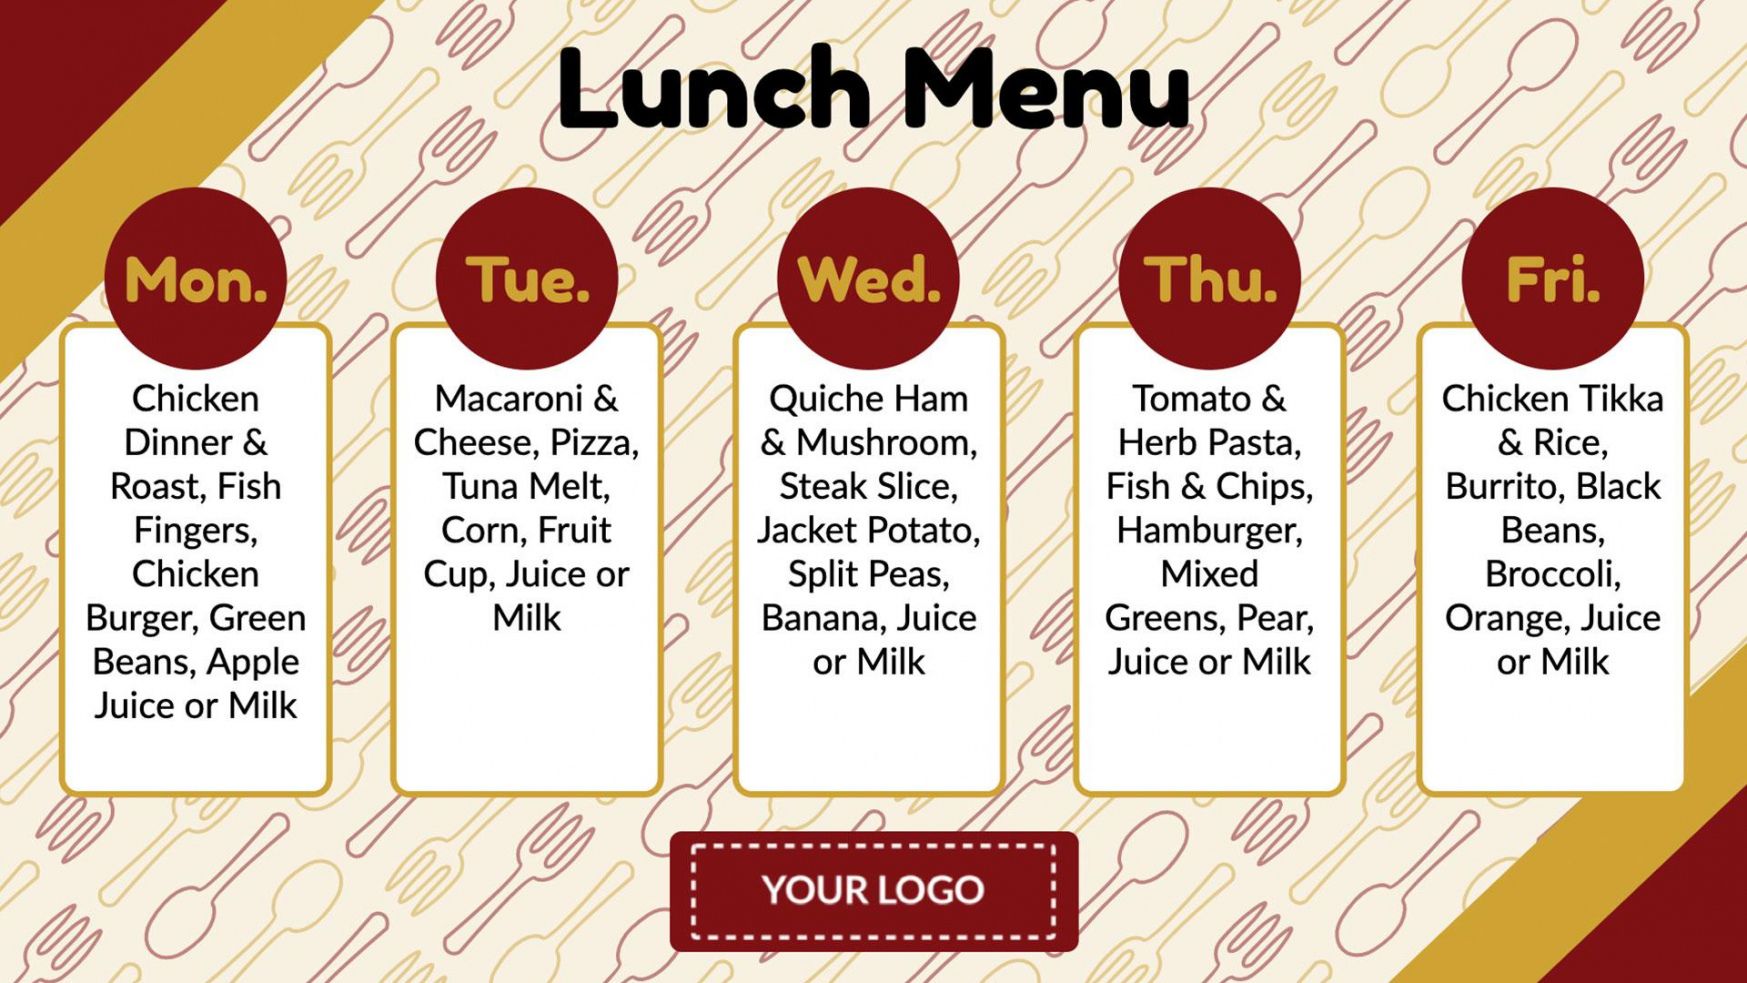 sample weekly lunch menu  digital signage template  rise vision elementary school lunch menu template word